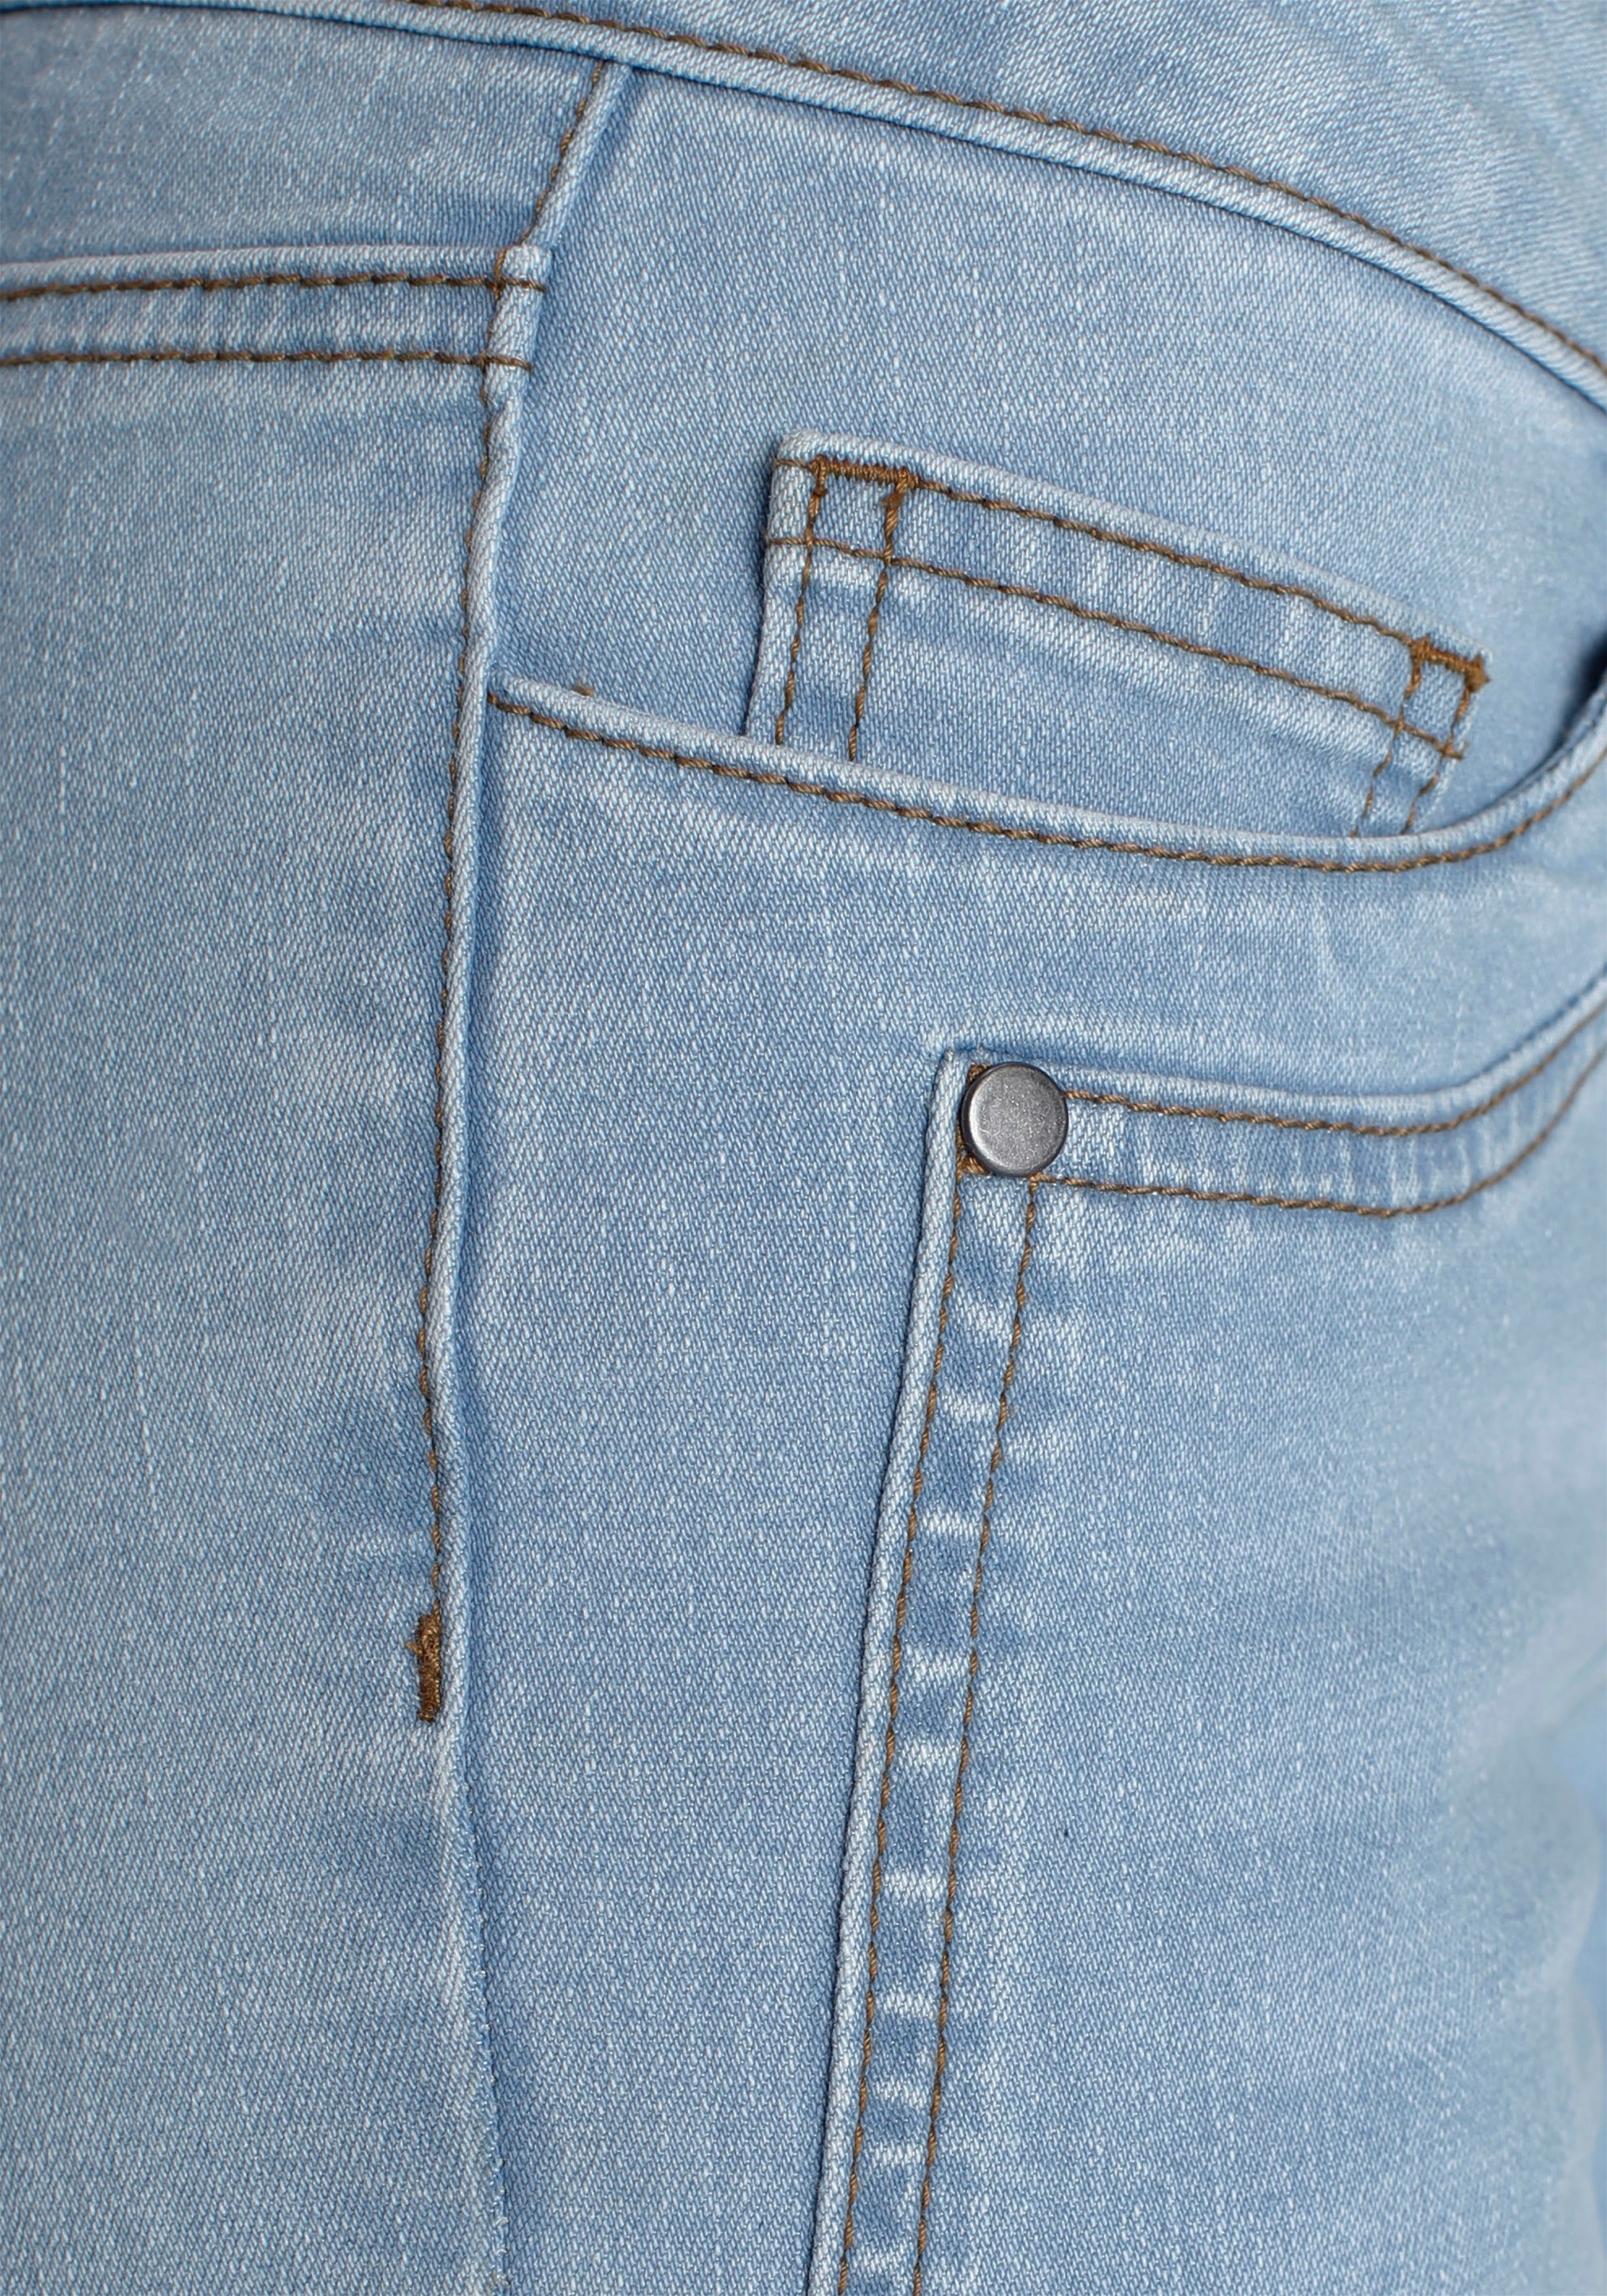 Bootcut-Jeans shoppen Waist »mit Low Arizona Keileinsätzen«,